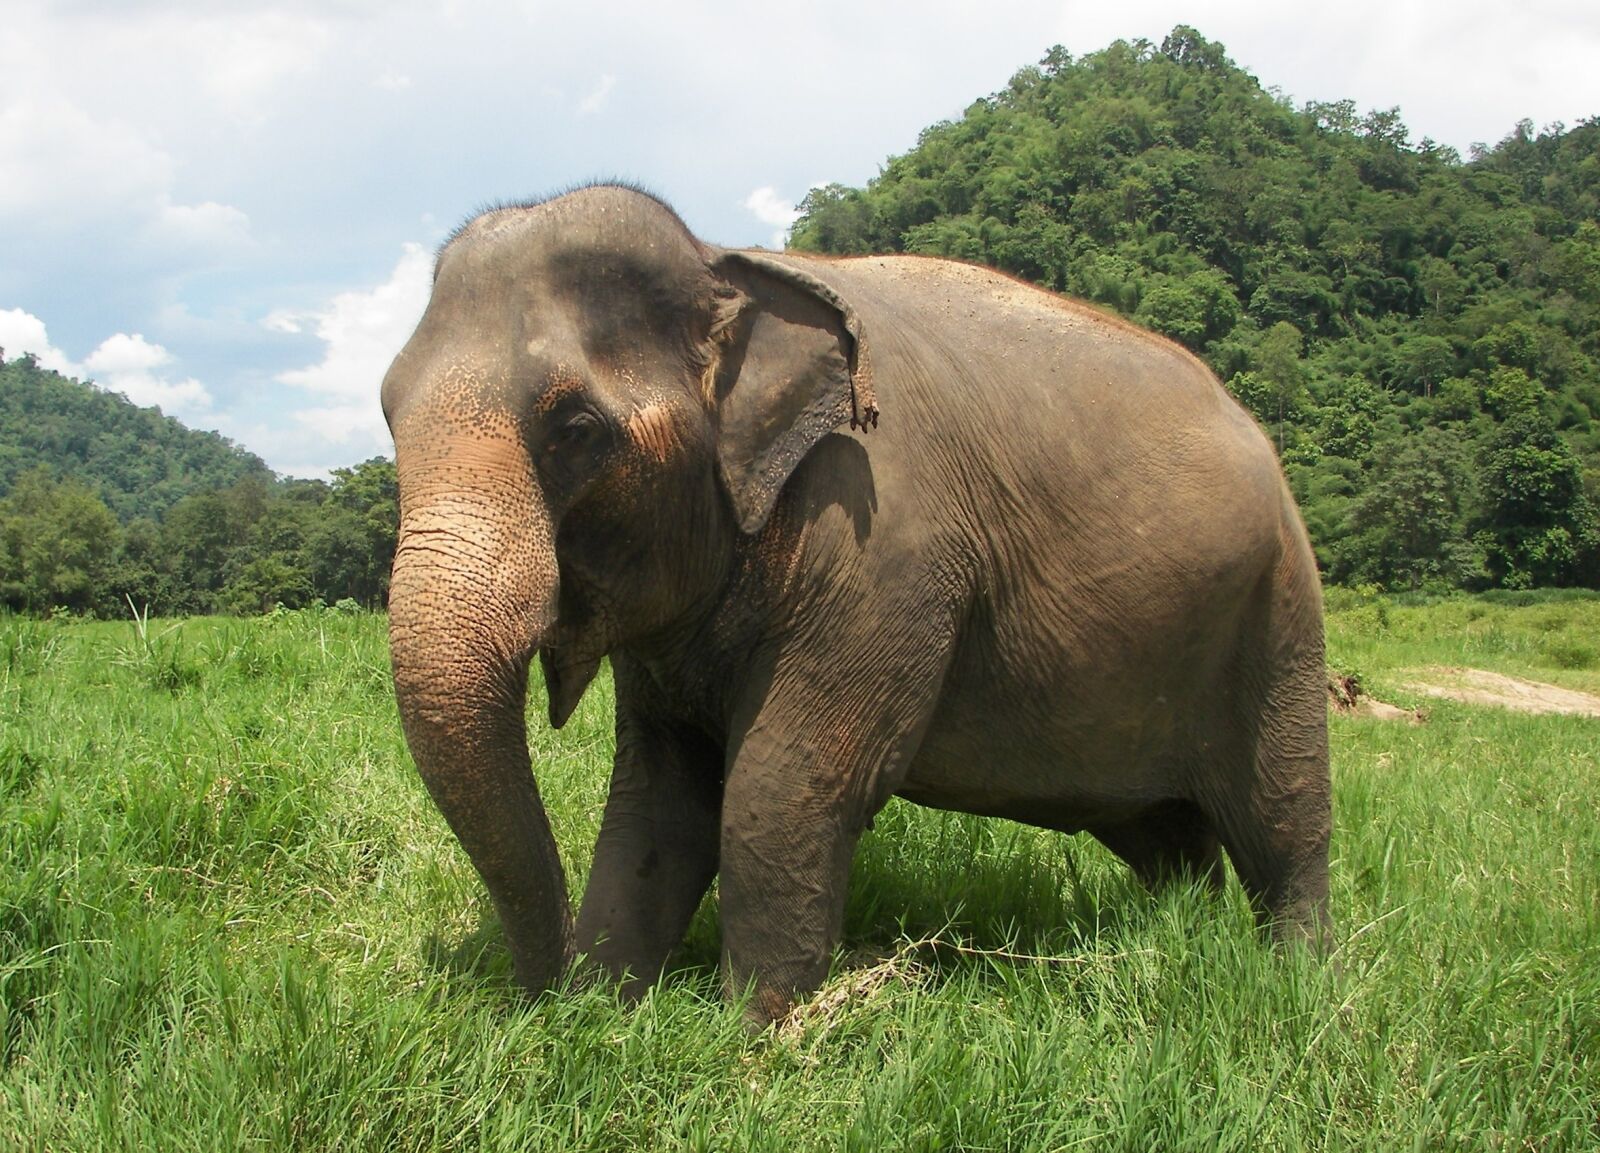 Kodak P850 ZOOM DIGITAL CAMERA sample photo. Elephant, thailand, elephant nature photography